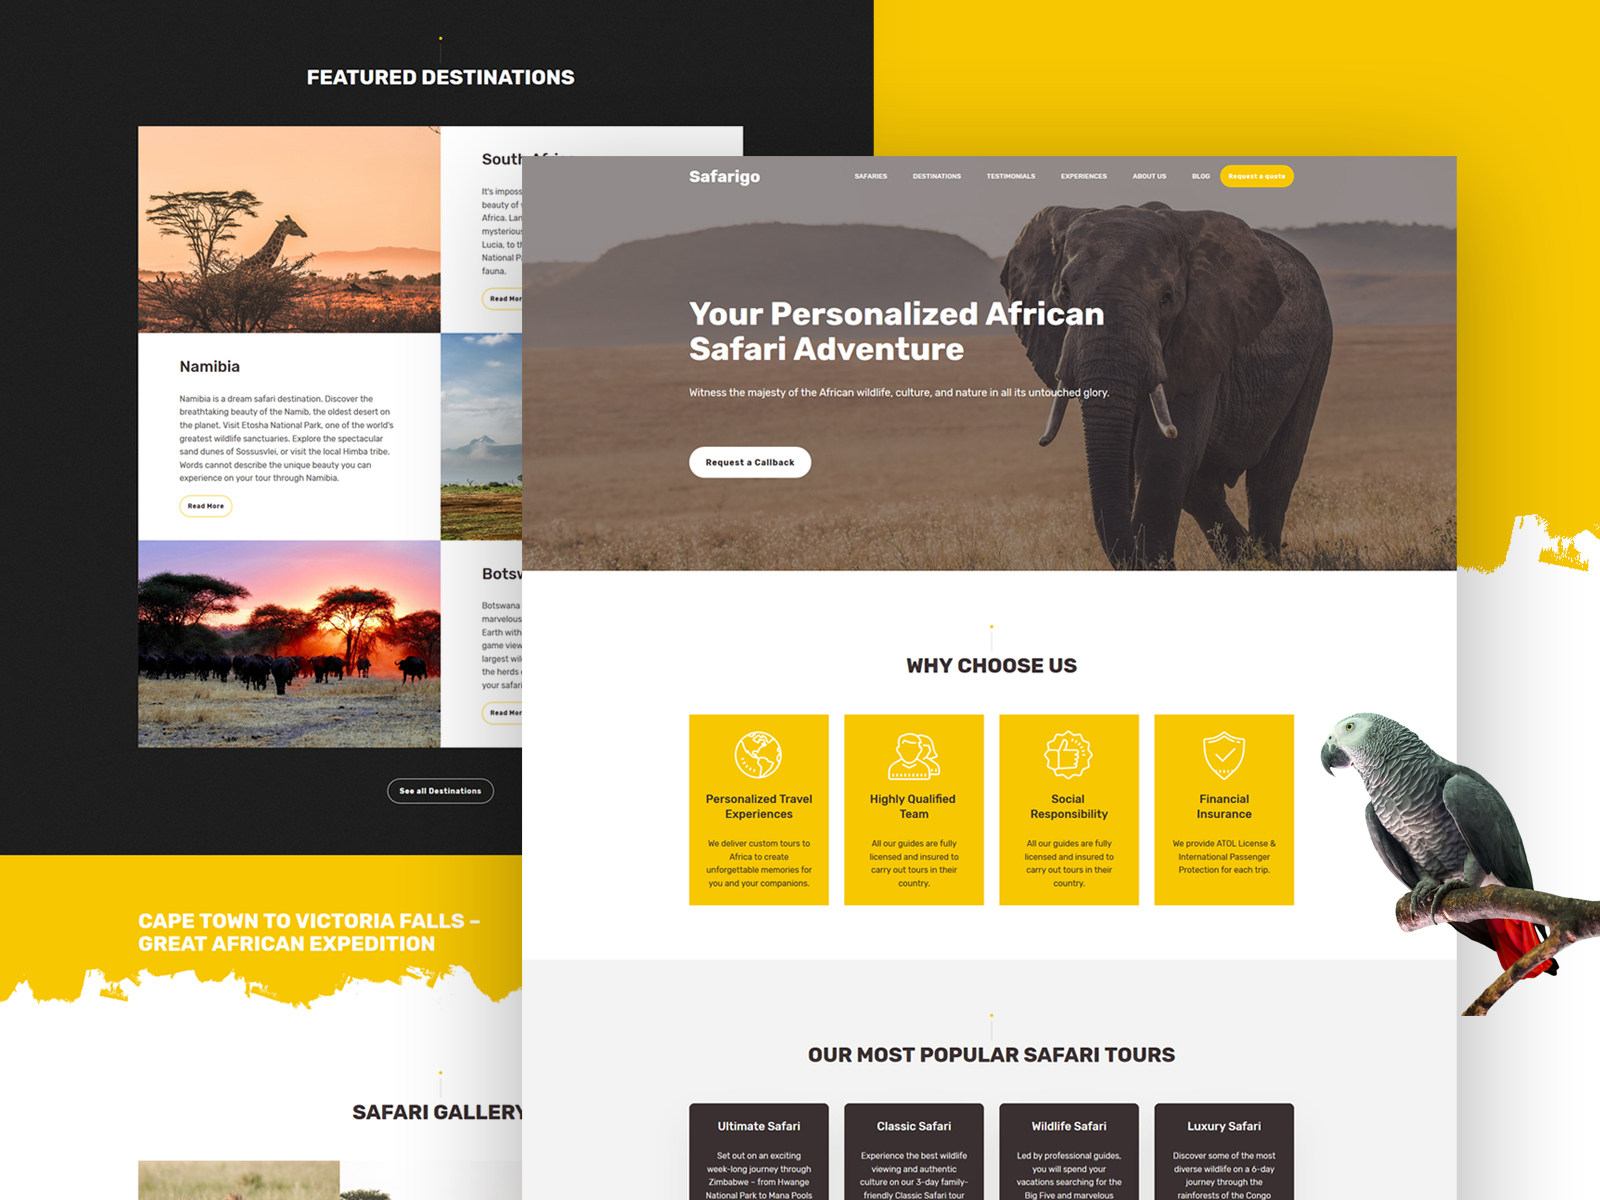 jungle safari website